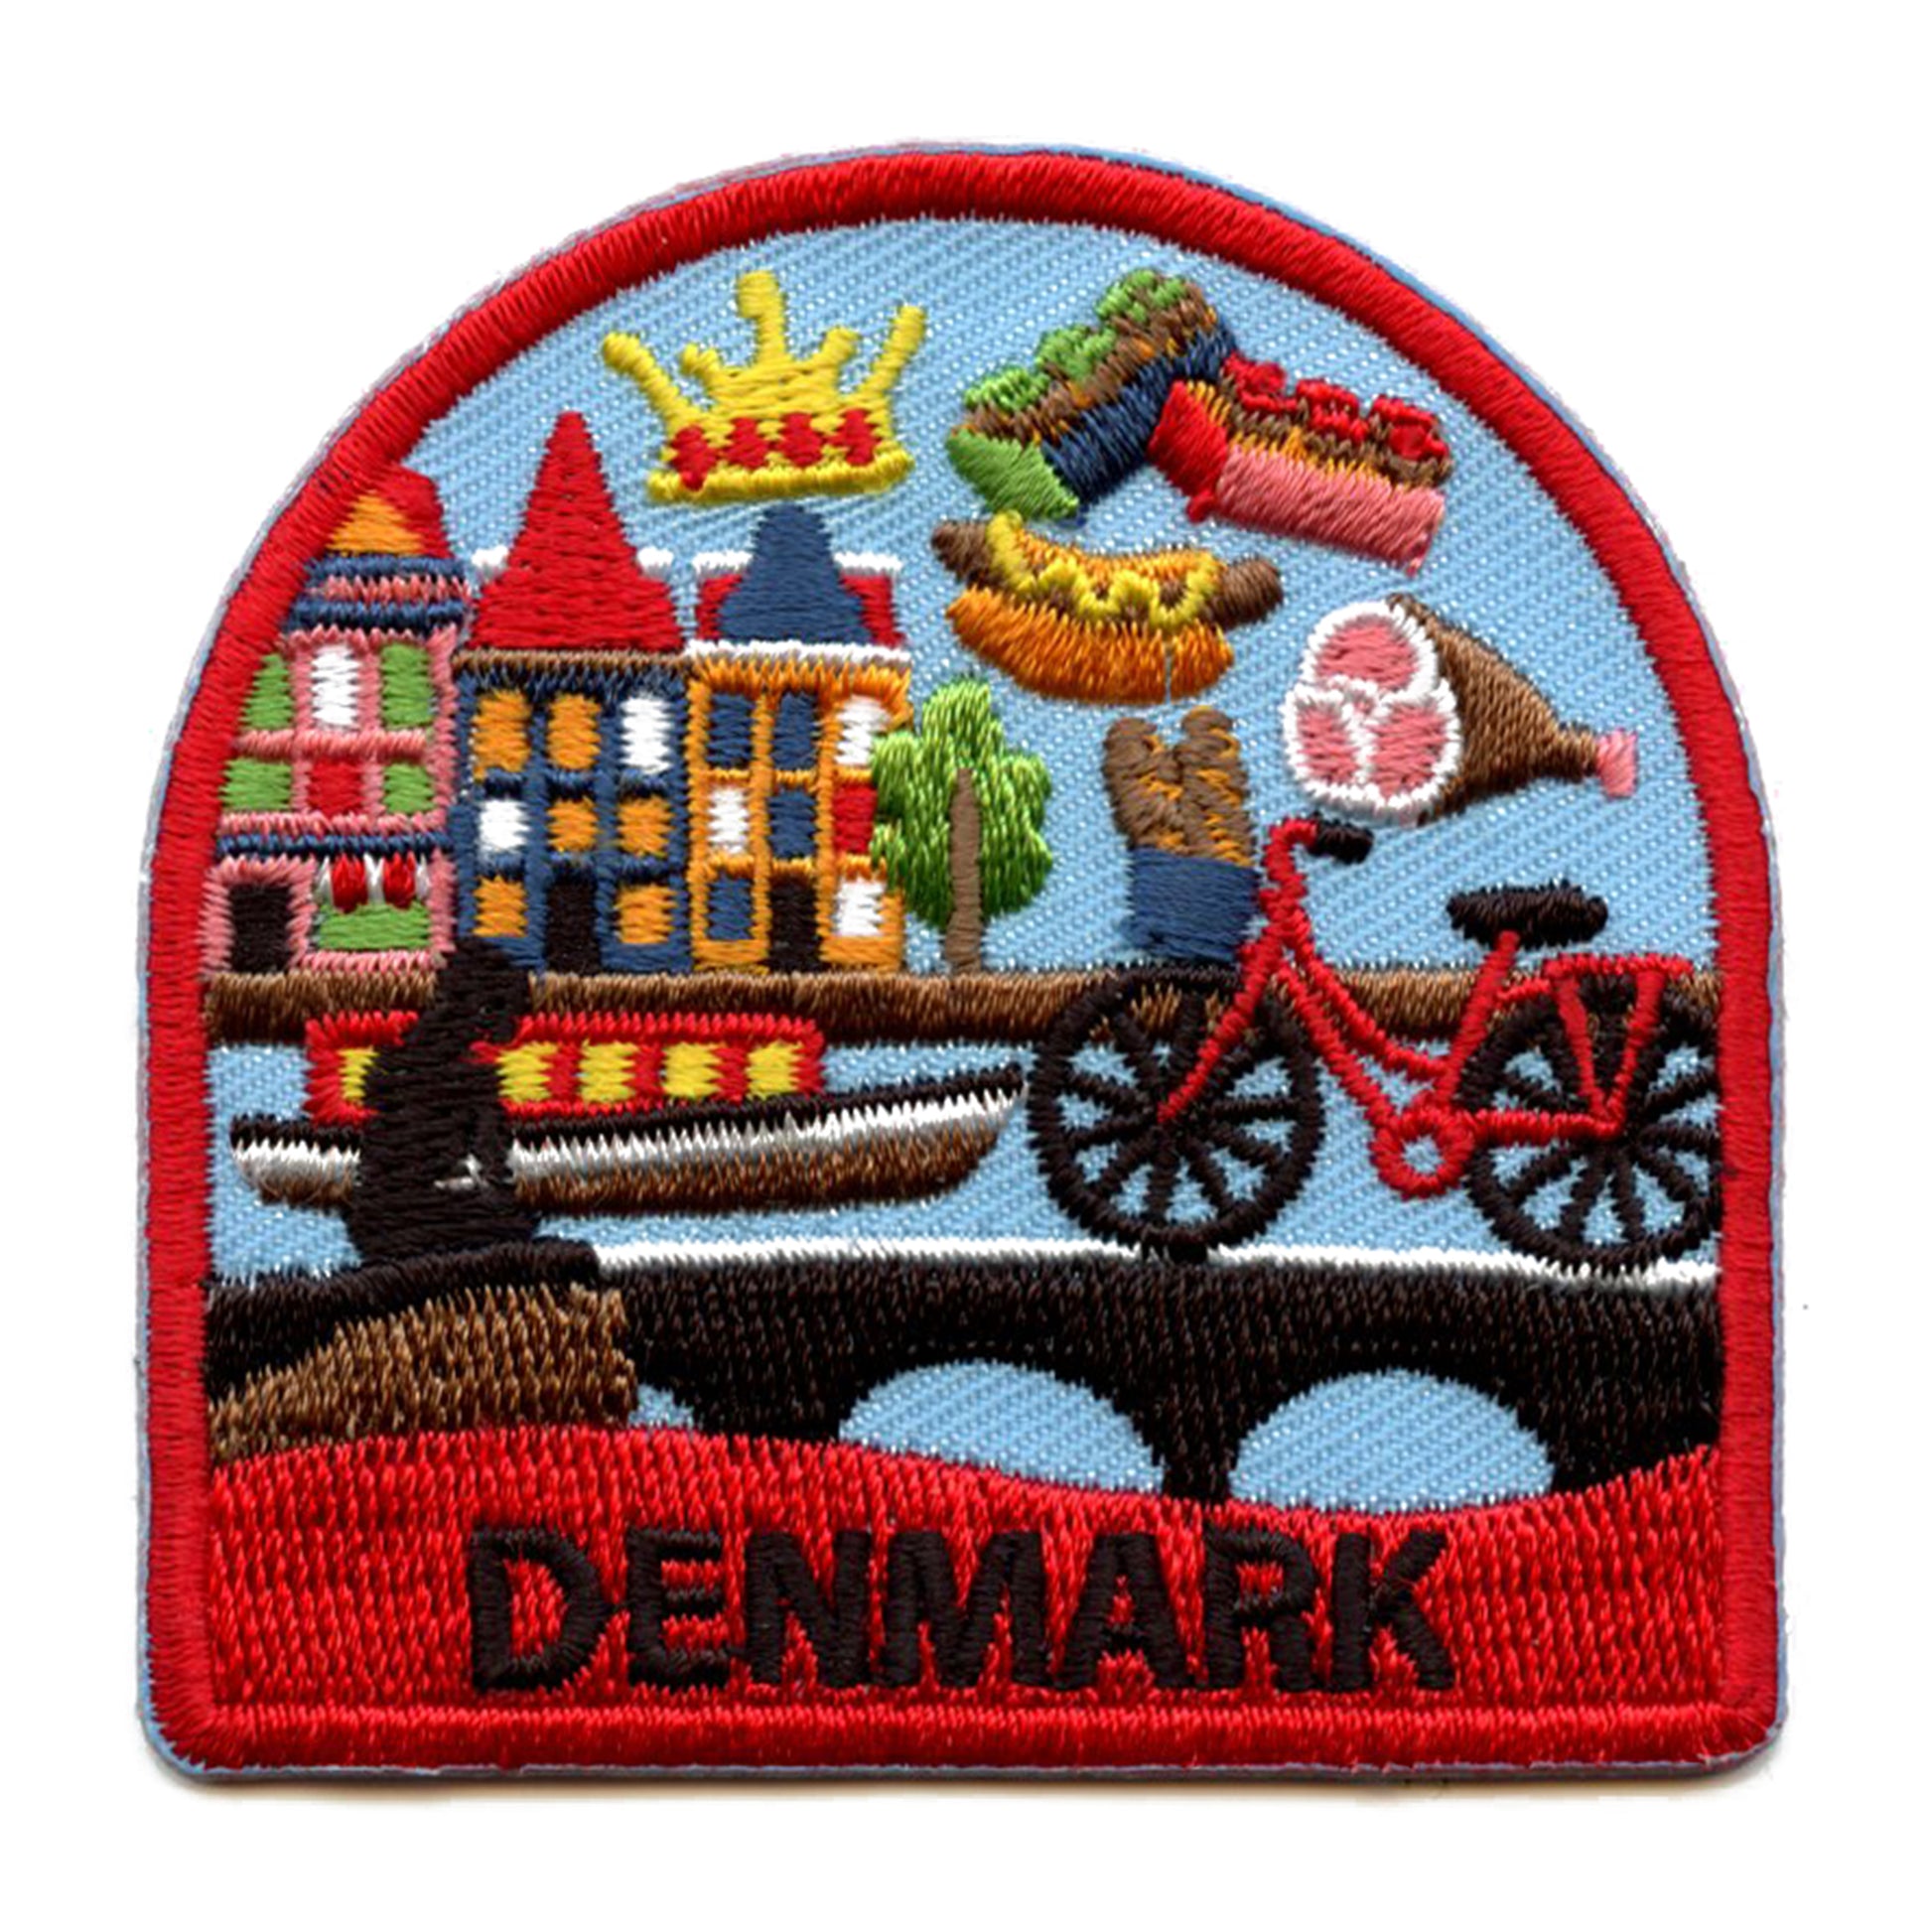 Denmark World Showcase Patch Travel Badge Scandinavian Embroidered Iron On